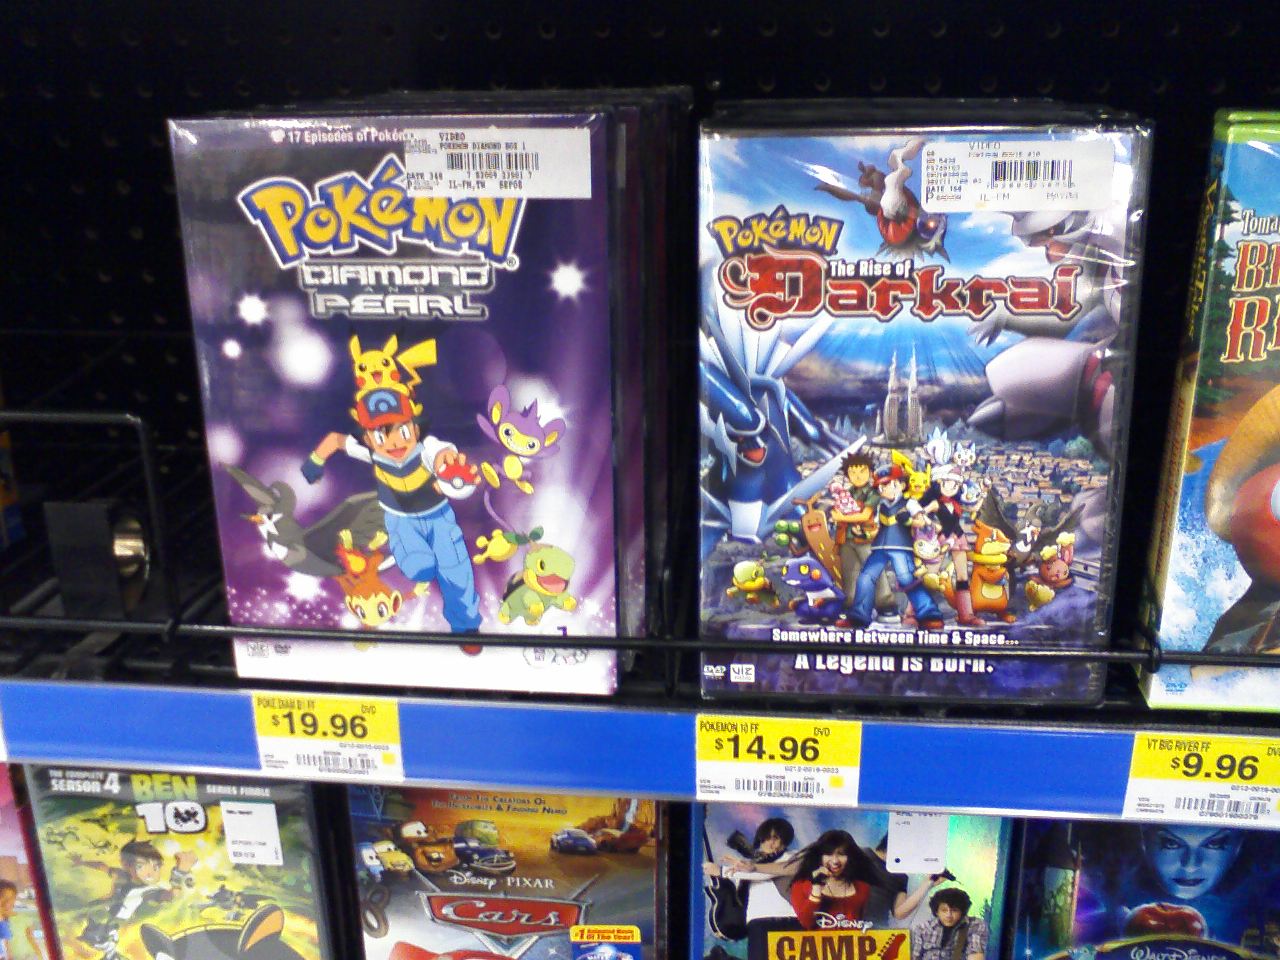 Pokemon Diamond and Pearl Box Volume 1 and Pokemon the Rise of Darkrai DVD at Wal-Mart